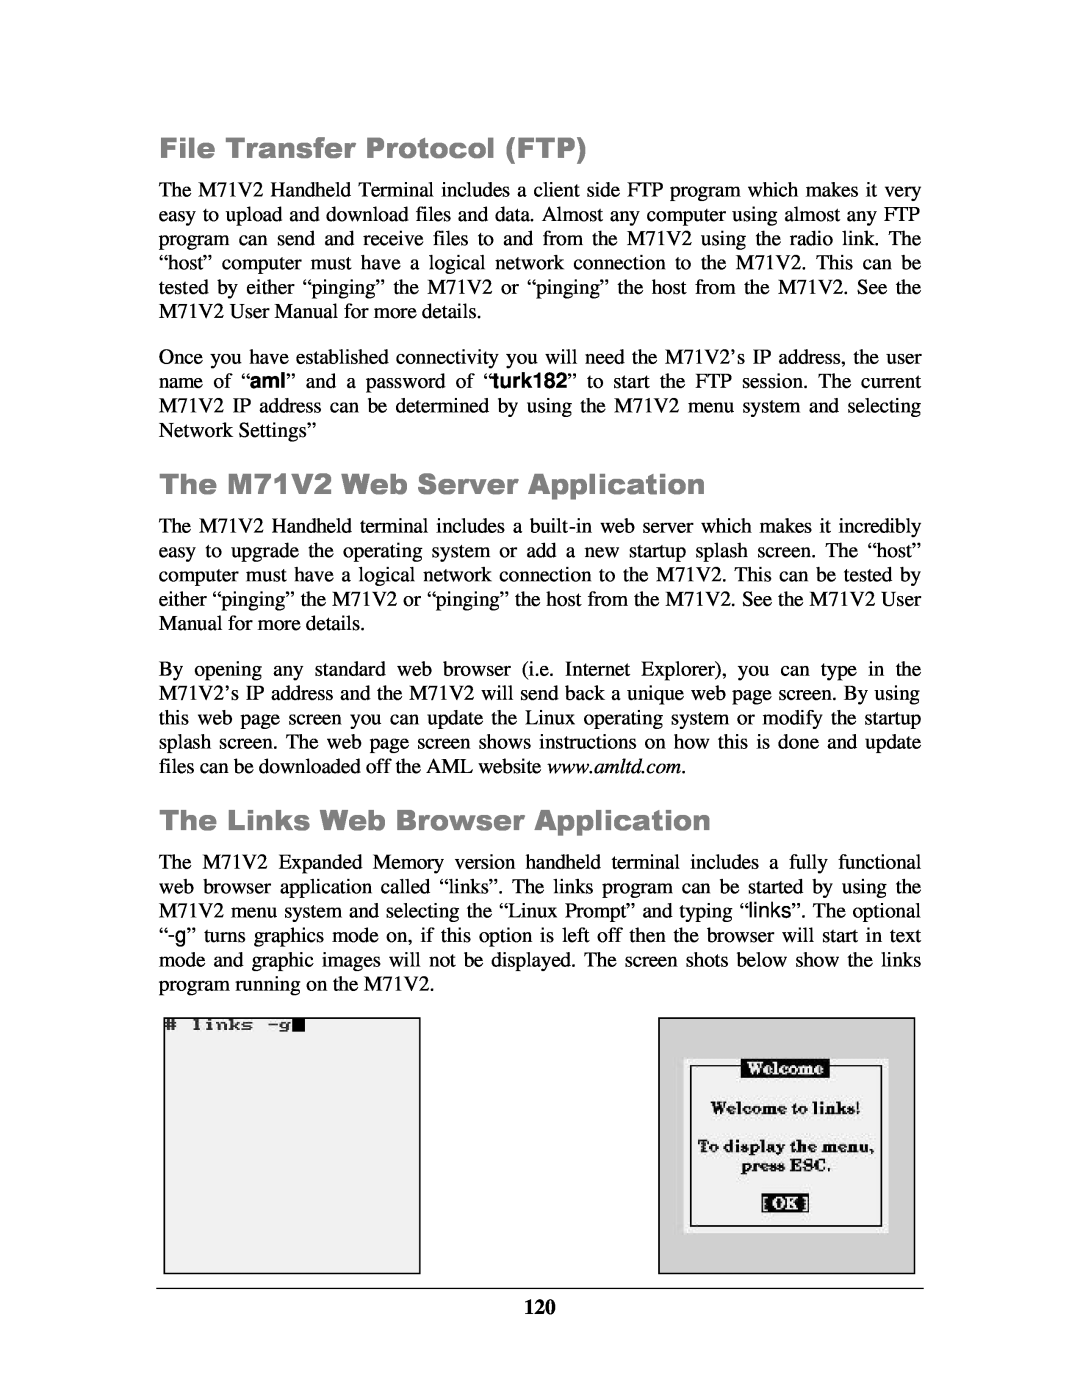 IBM manual File Transfer Protocol FTP, The M71V2 Web Server Application, The Links Web Browser Application 